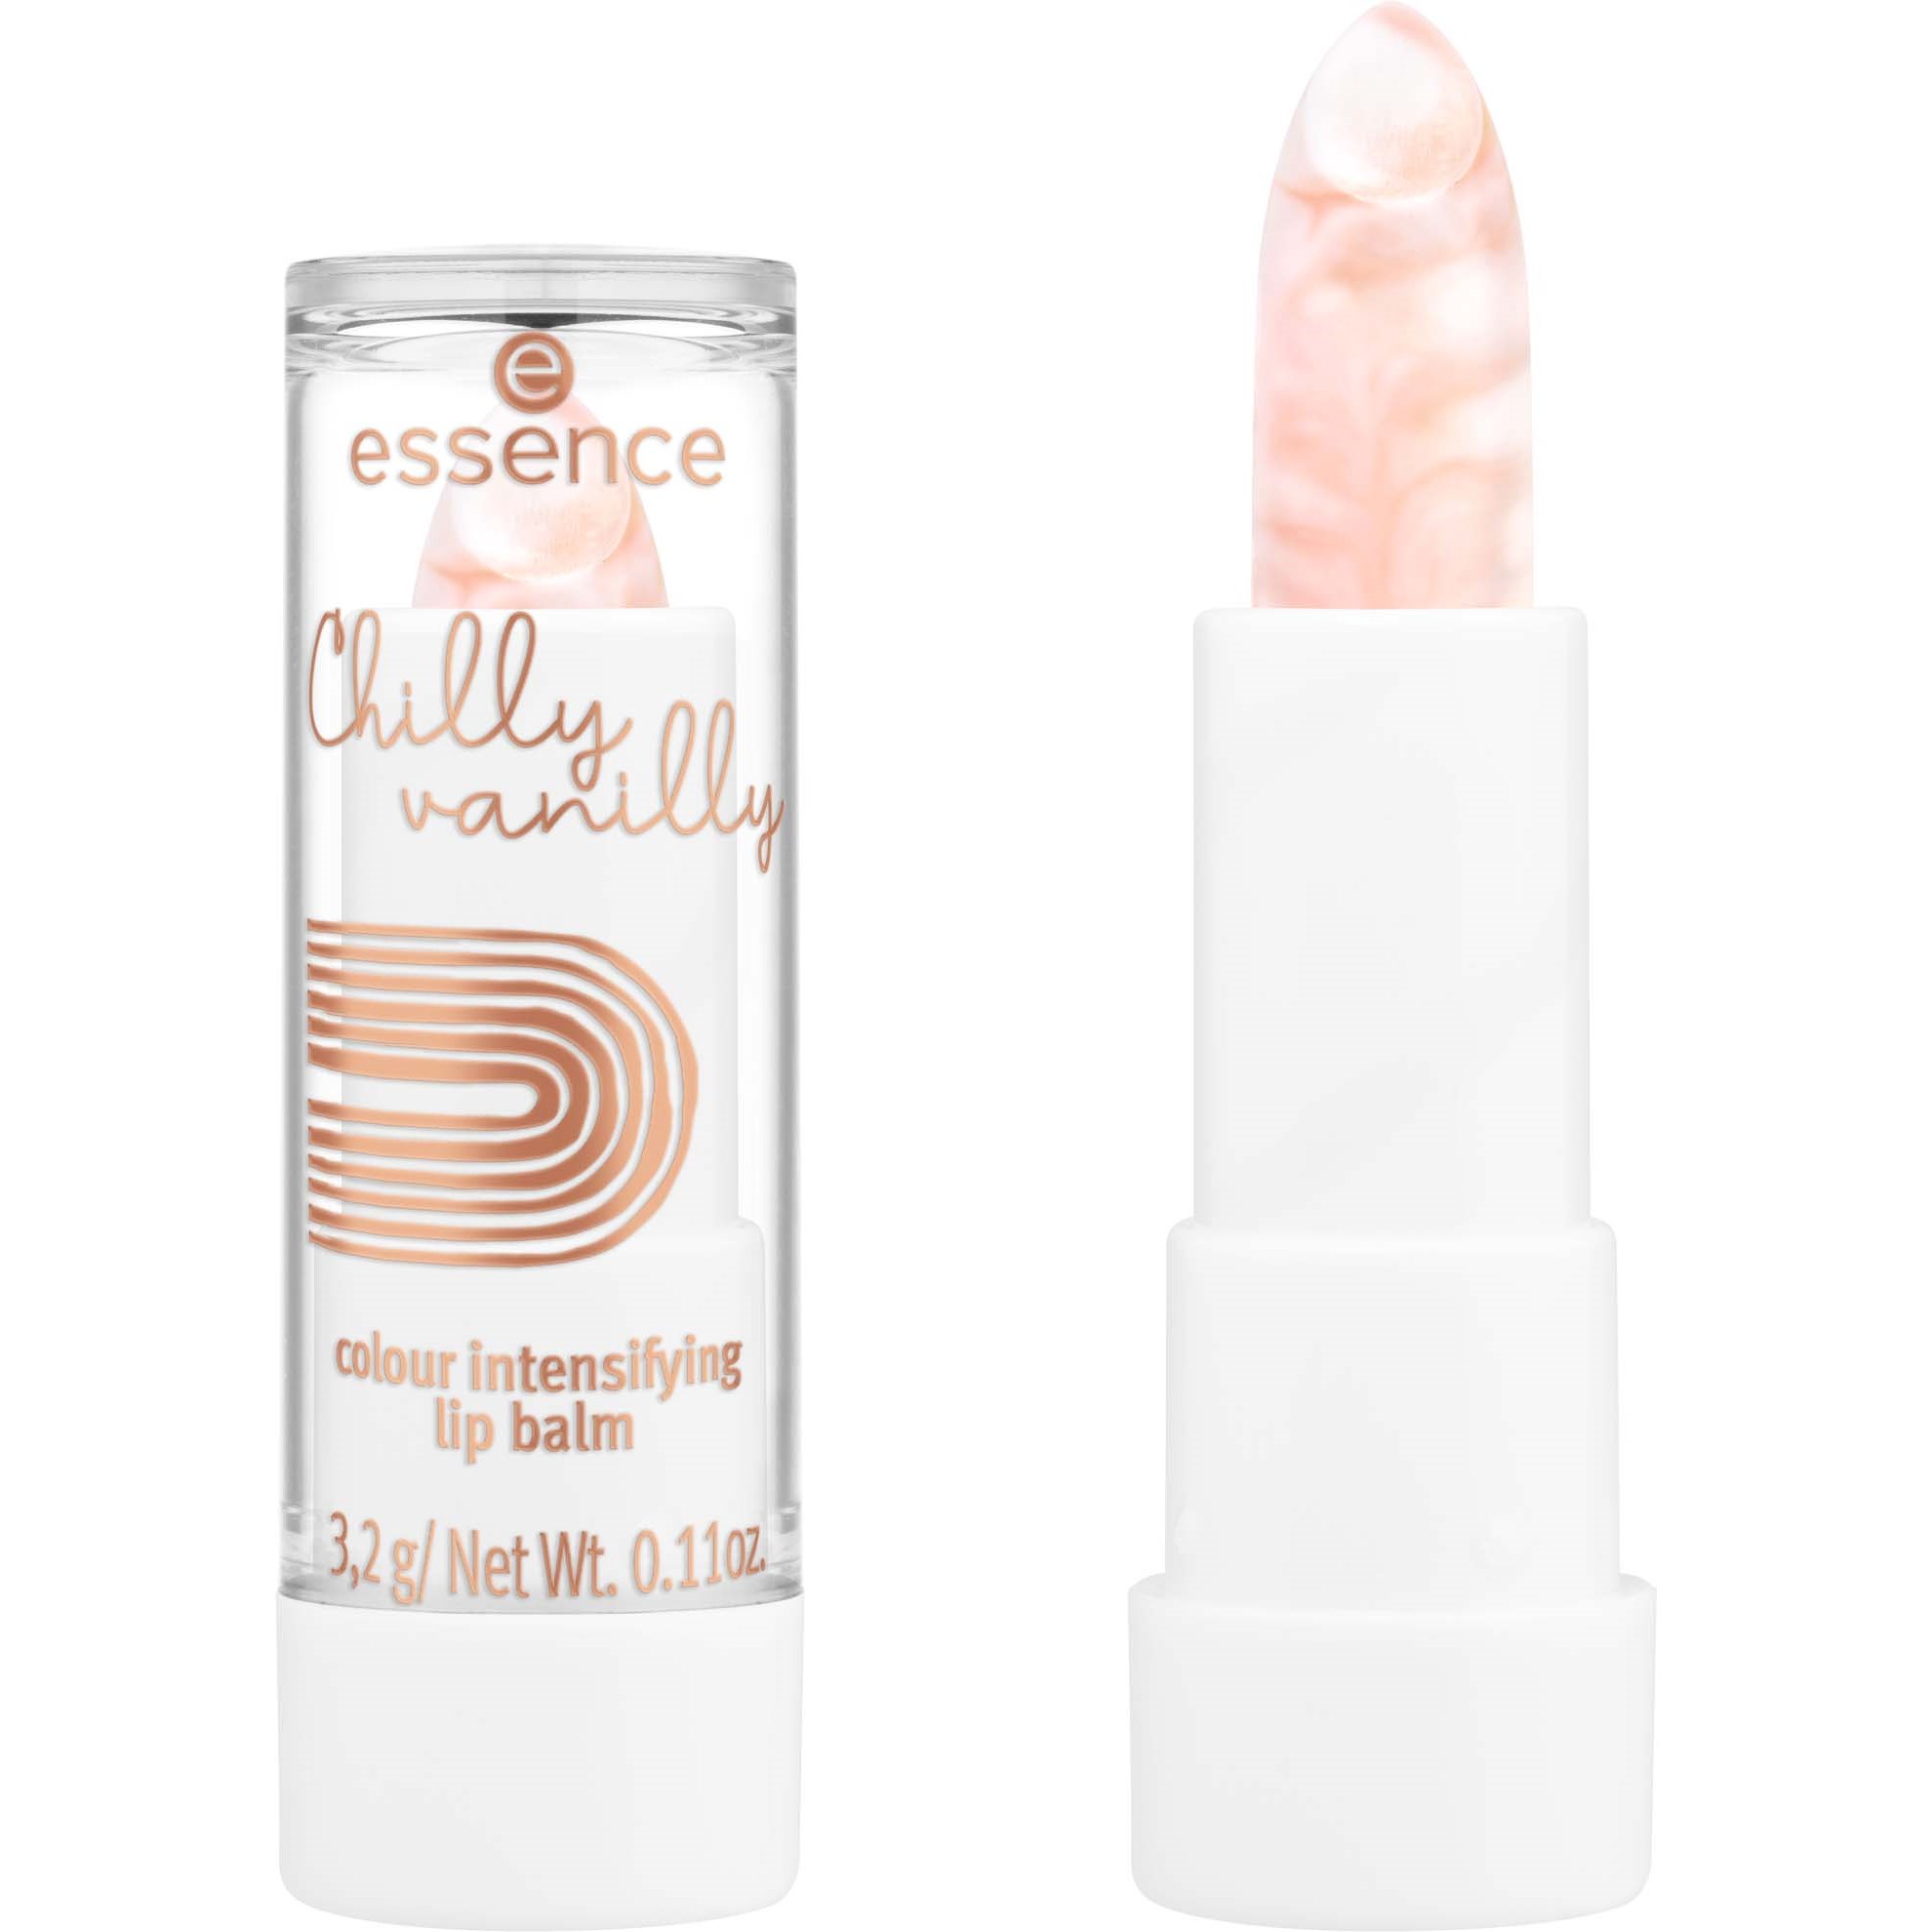 Läs mer om essence Chilly Vanilly Colour Intensifying Lip Balm